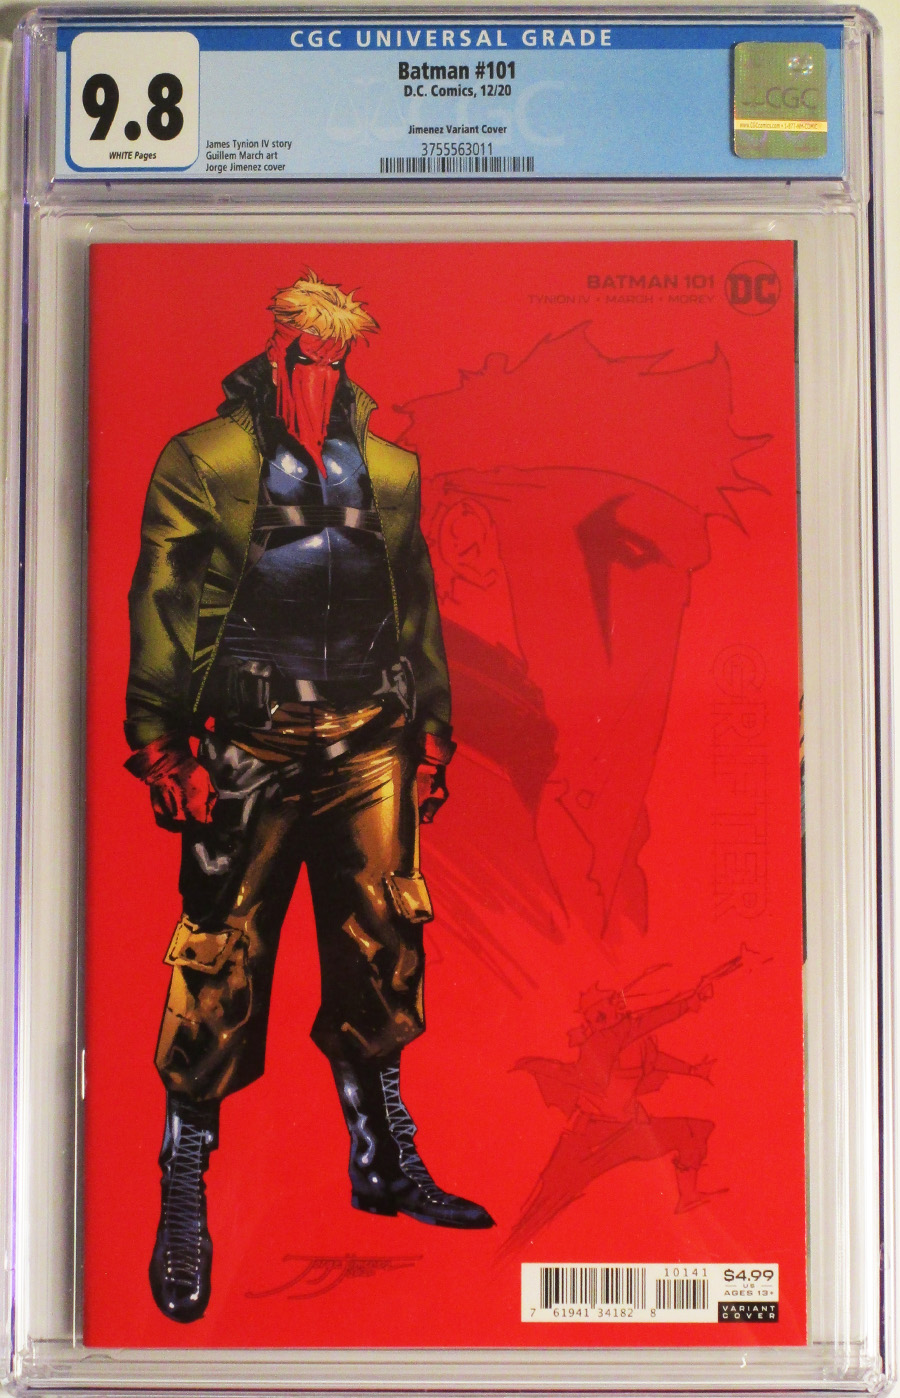 Batman Vol 3 #101 Cover F CGC 9.8 Incentive Jorge Jimenez Grifter Card Stock Variant Cover (Joker War Aftermath Tie-In)